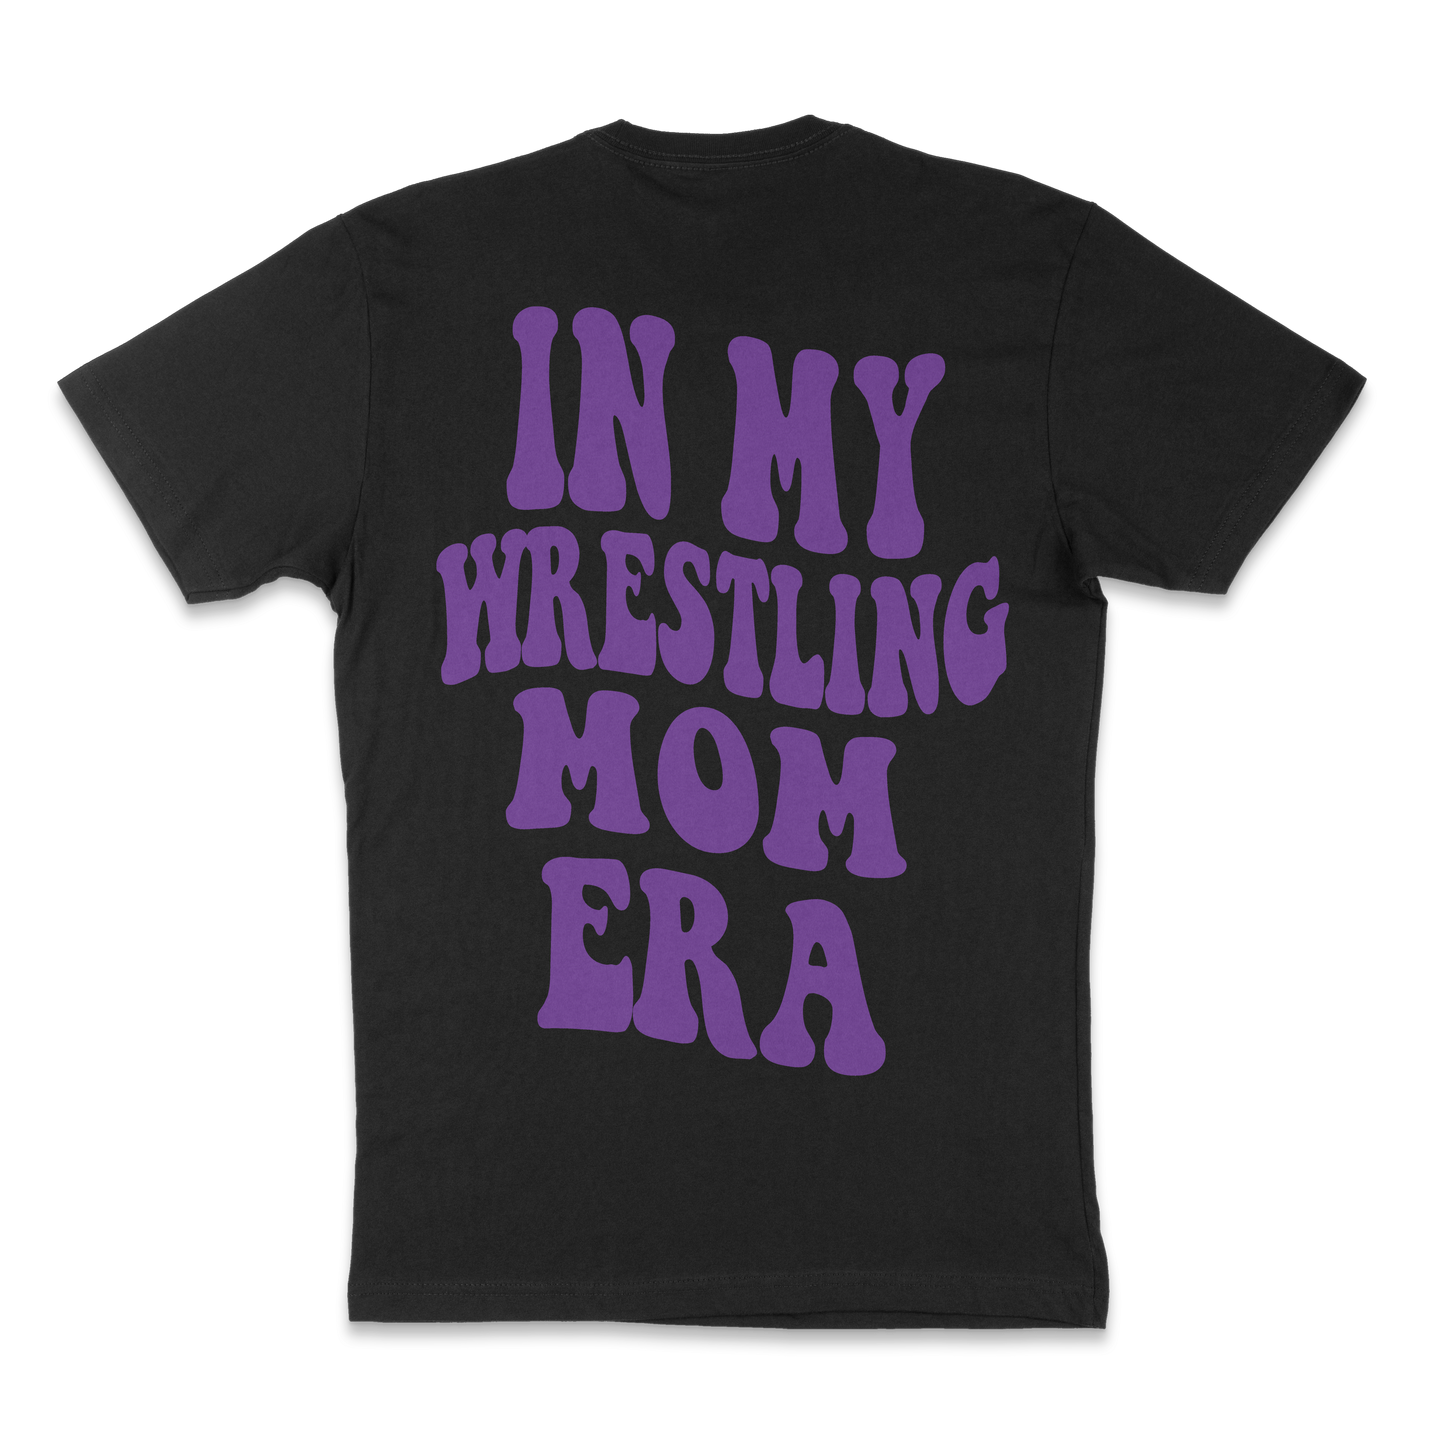 Wrestling mom era (Purple font)